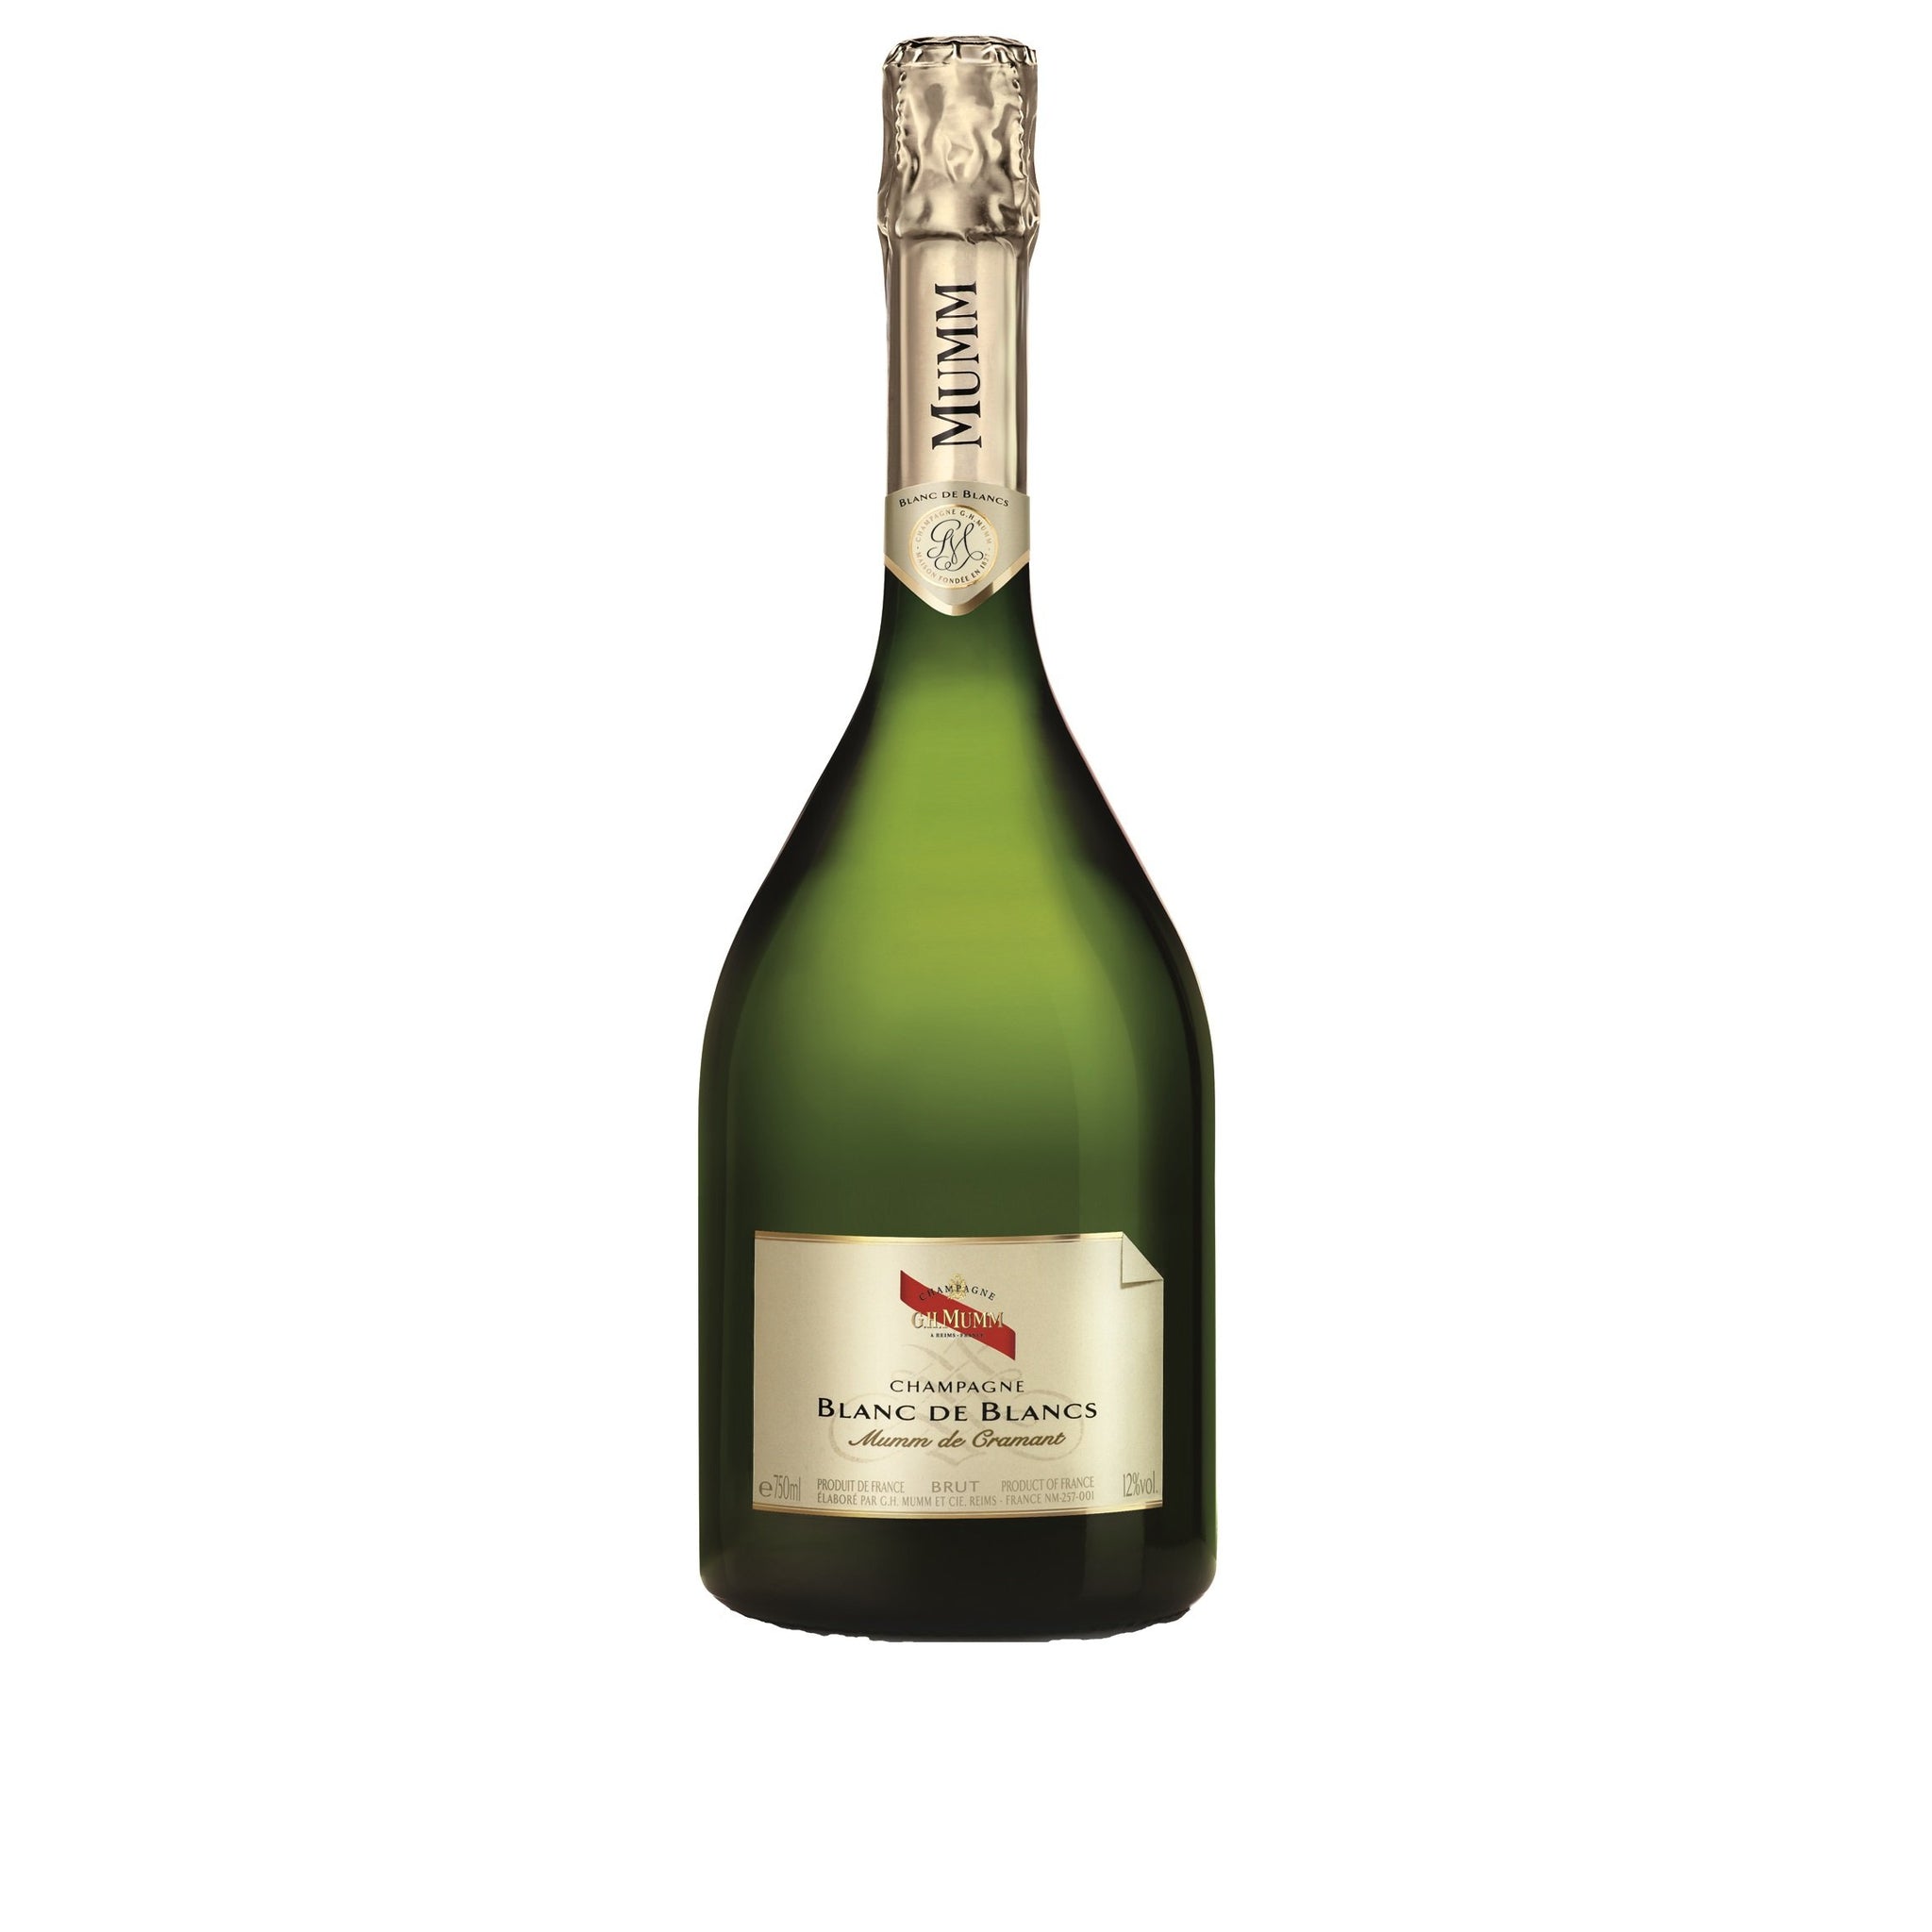 Mr. Booze.dk Mumm Champagne Blanc de Blancs "Mumm de Cramant" (75 cl.)